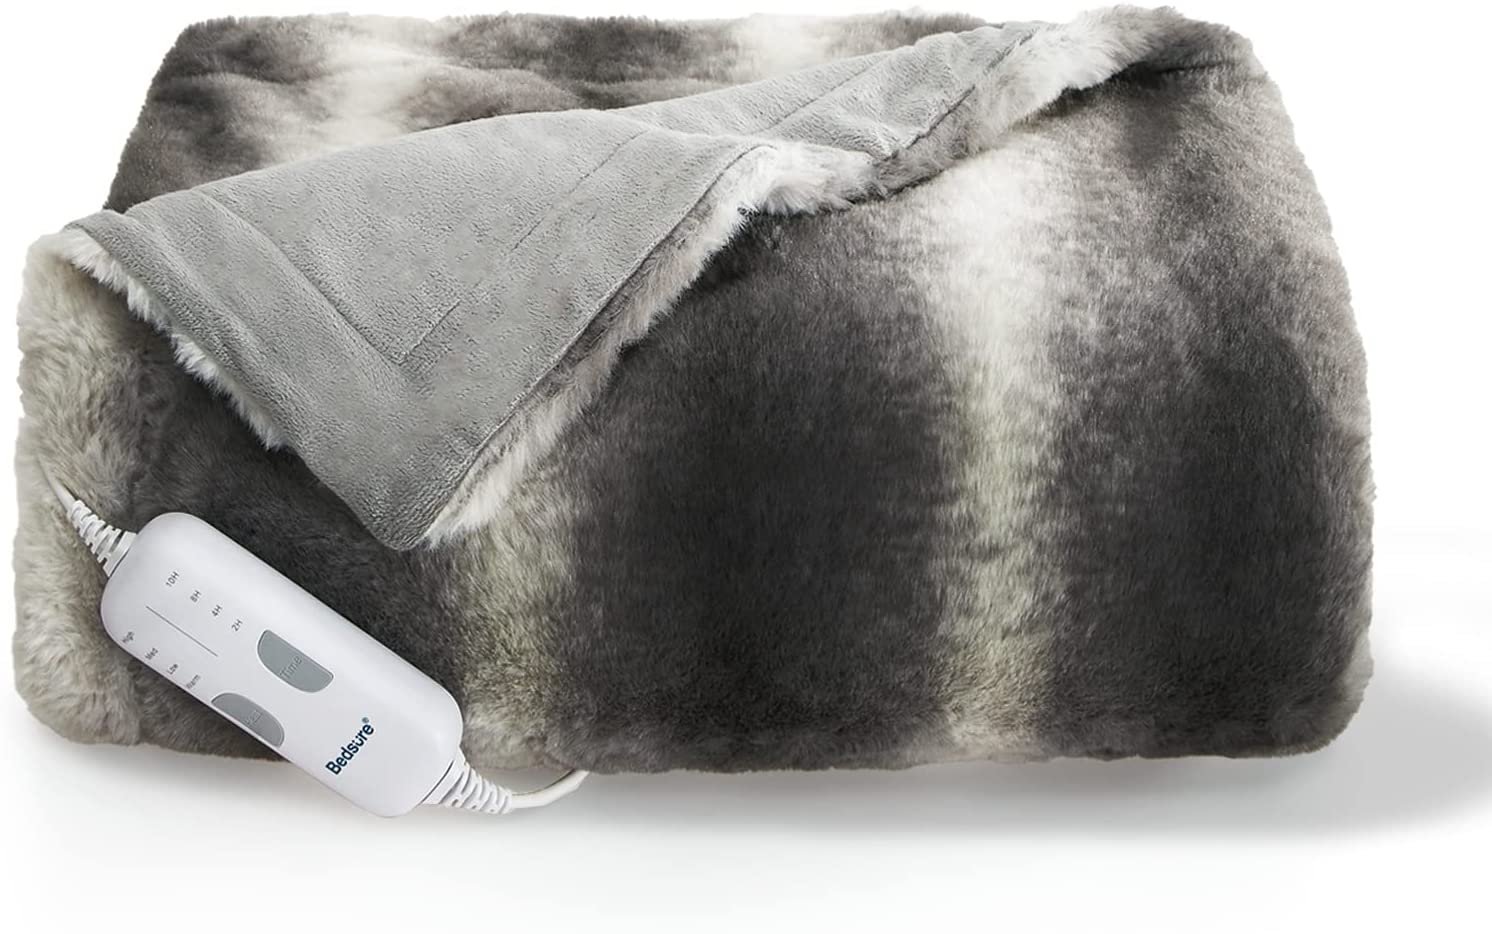 Bedsure Heated Blanket Black Friday Deal on Amazon!